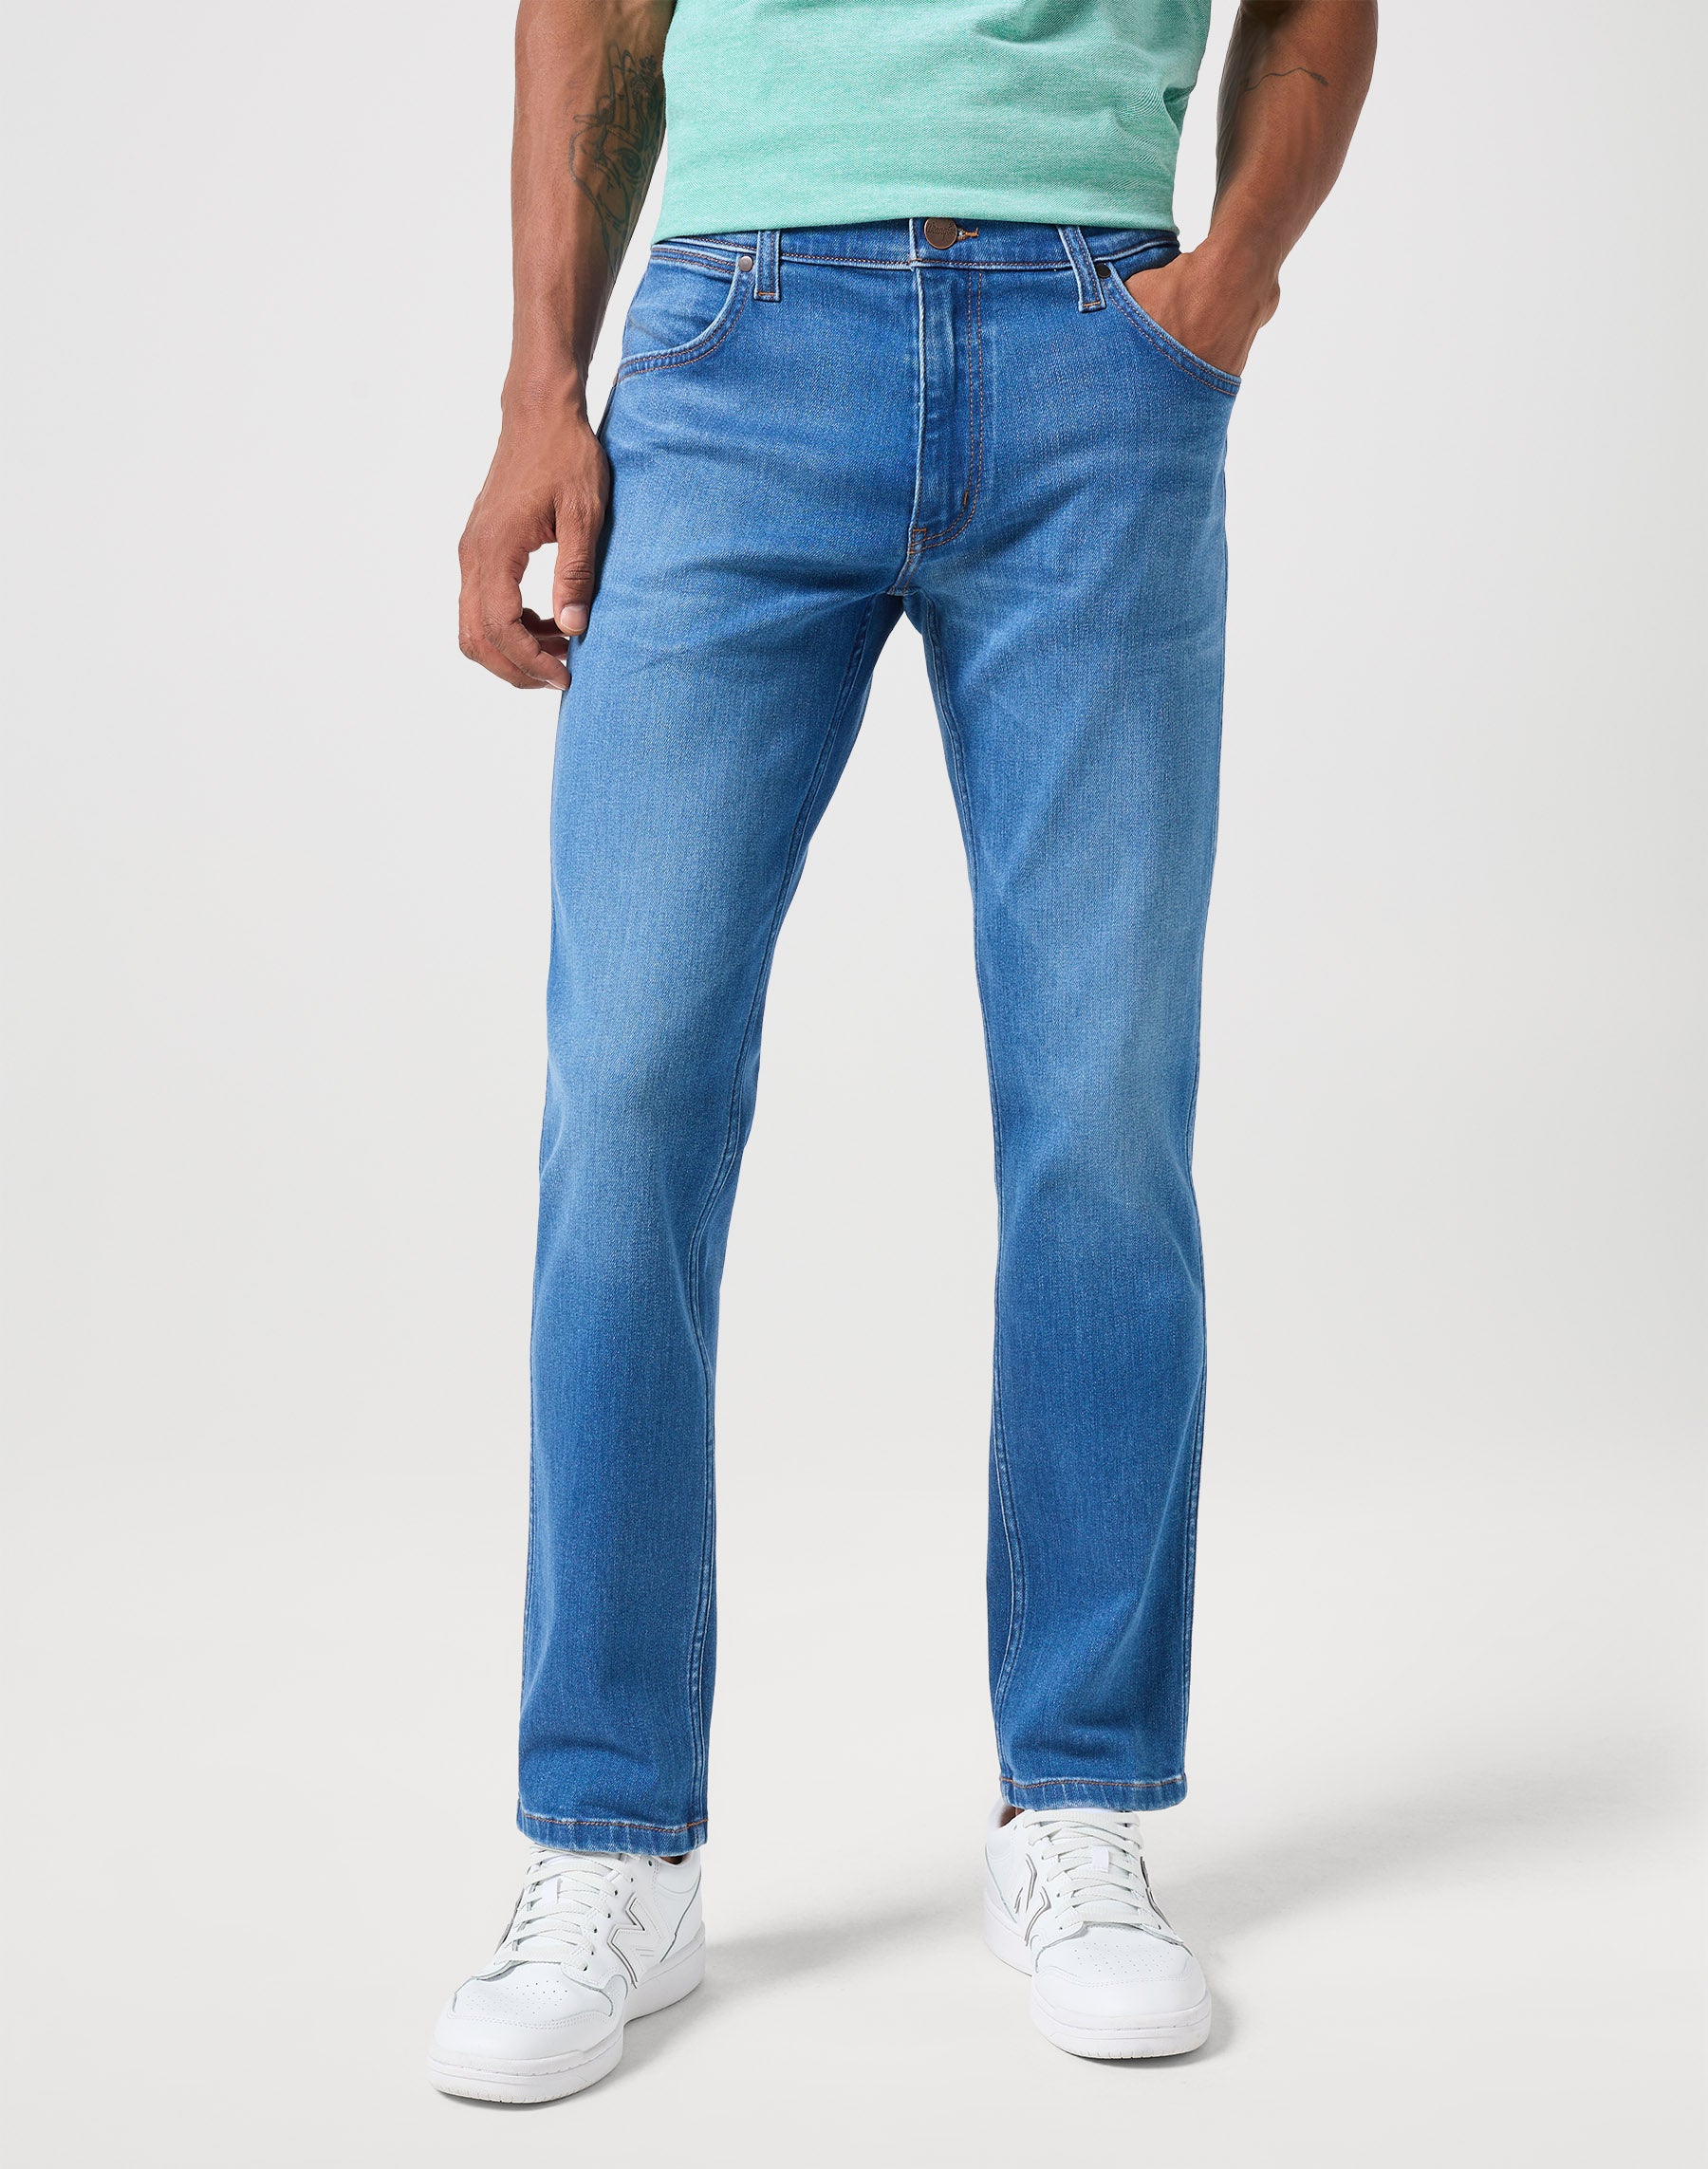 Greensboro High Stretch in Rustic Jeans Wrangler   